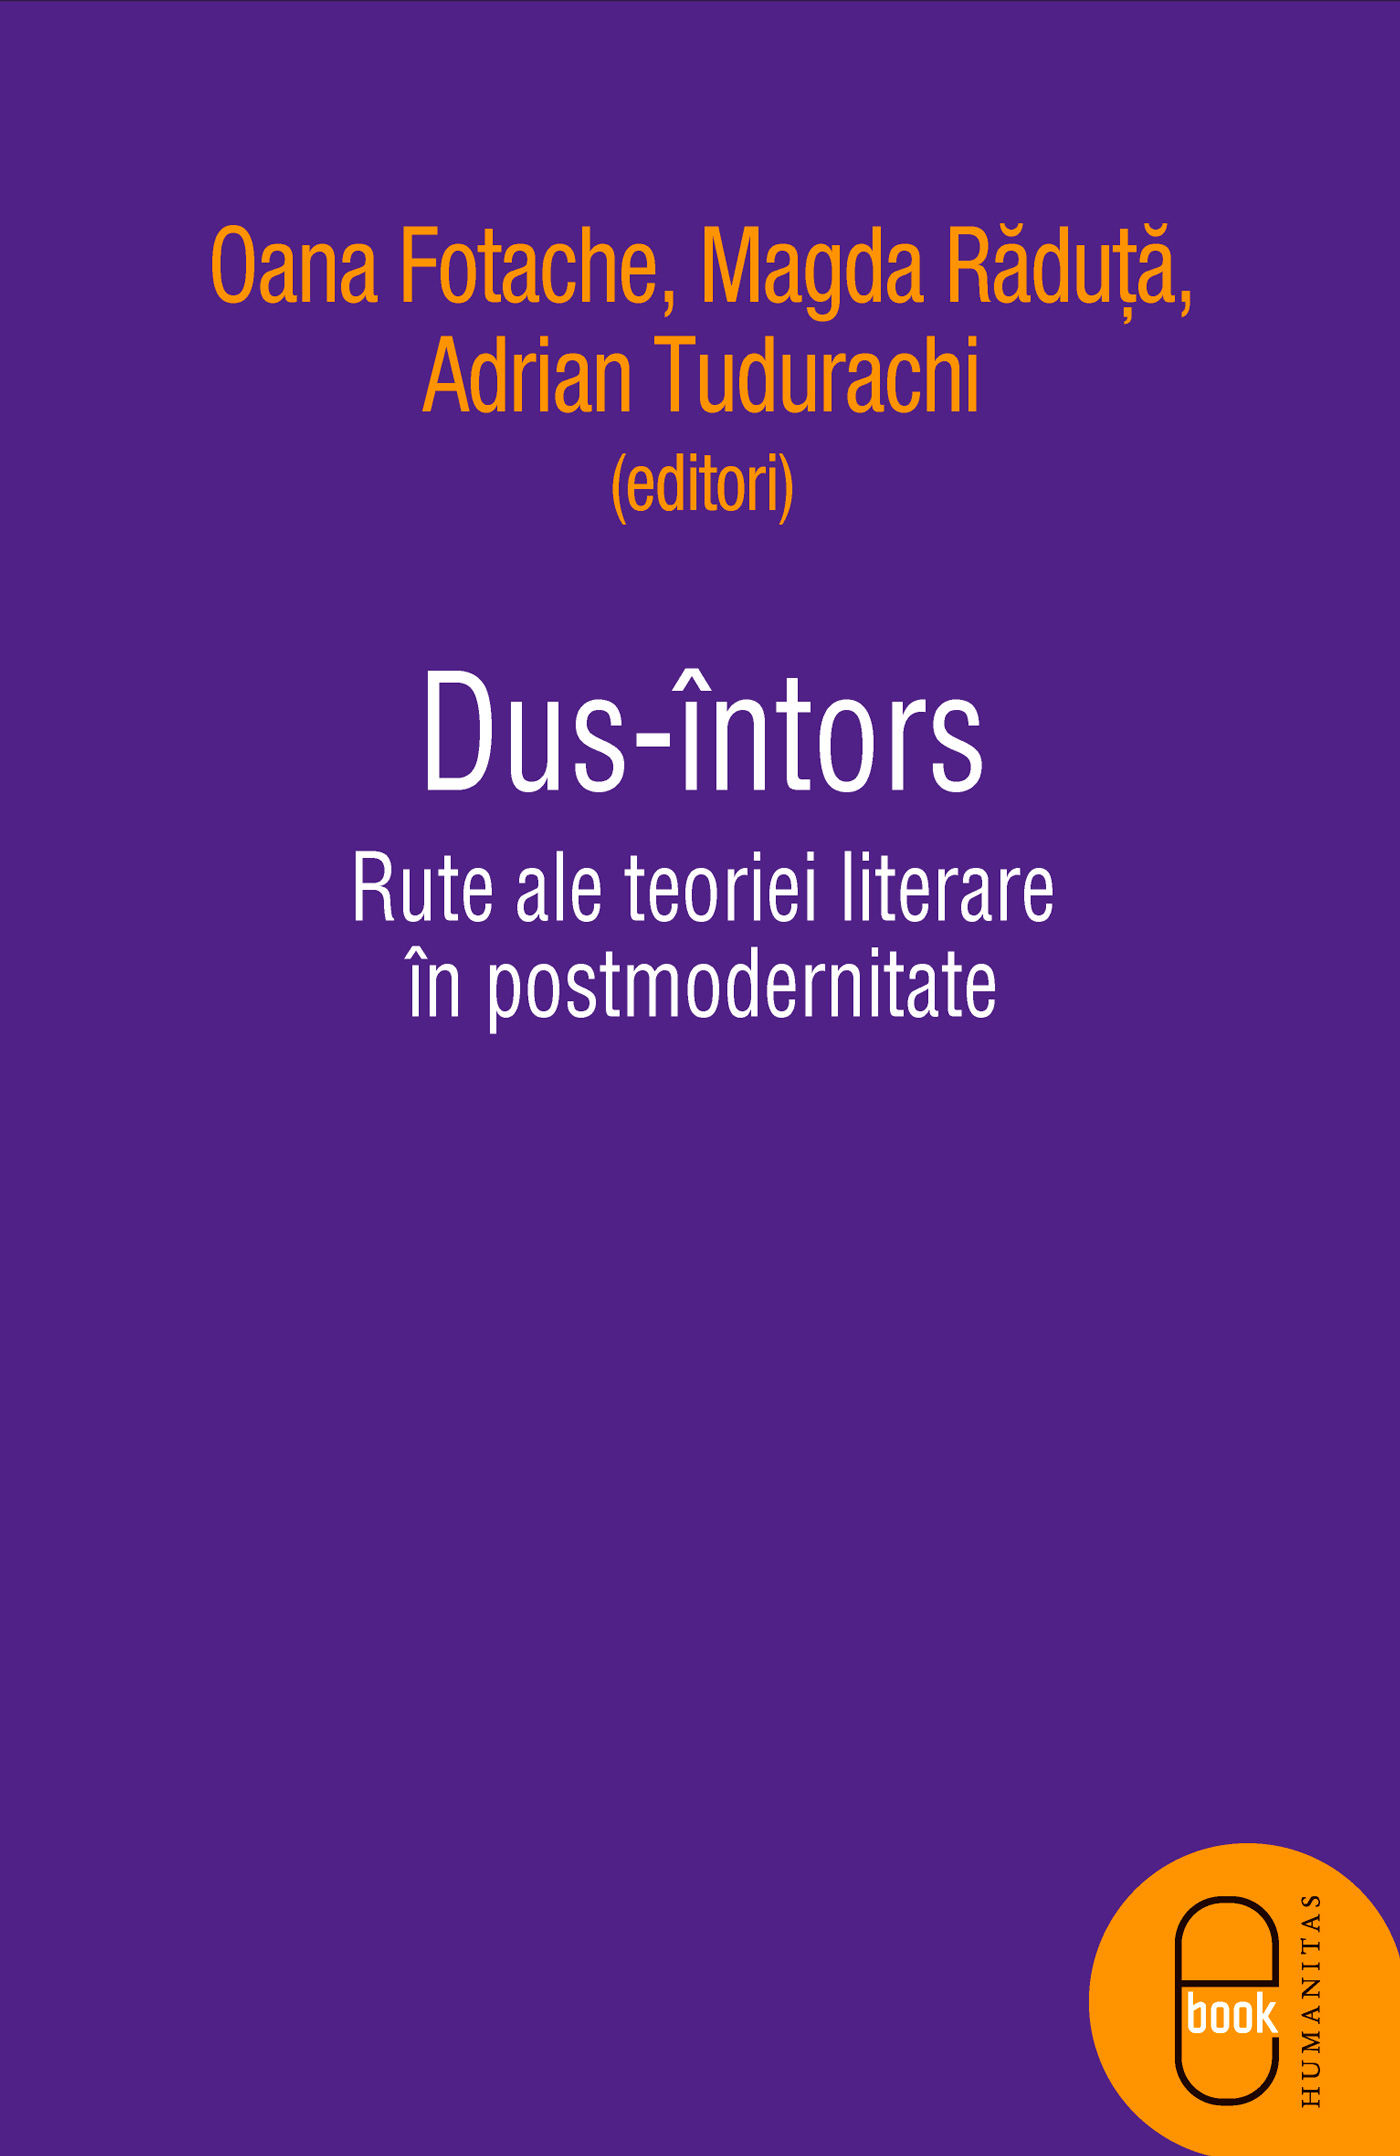 Dus-intors: rute ale teoriei literare in postmodernitate (epub)